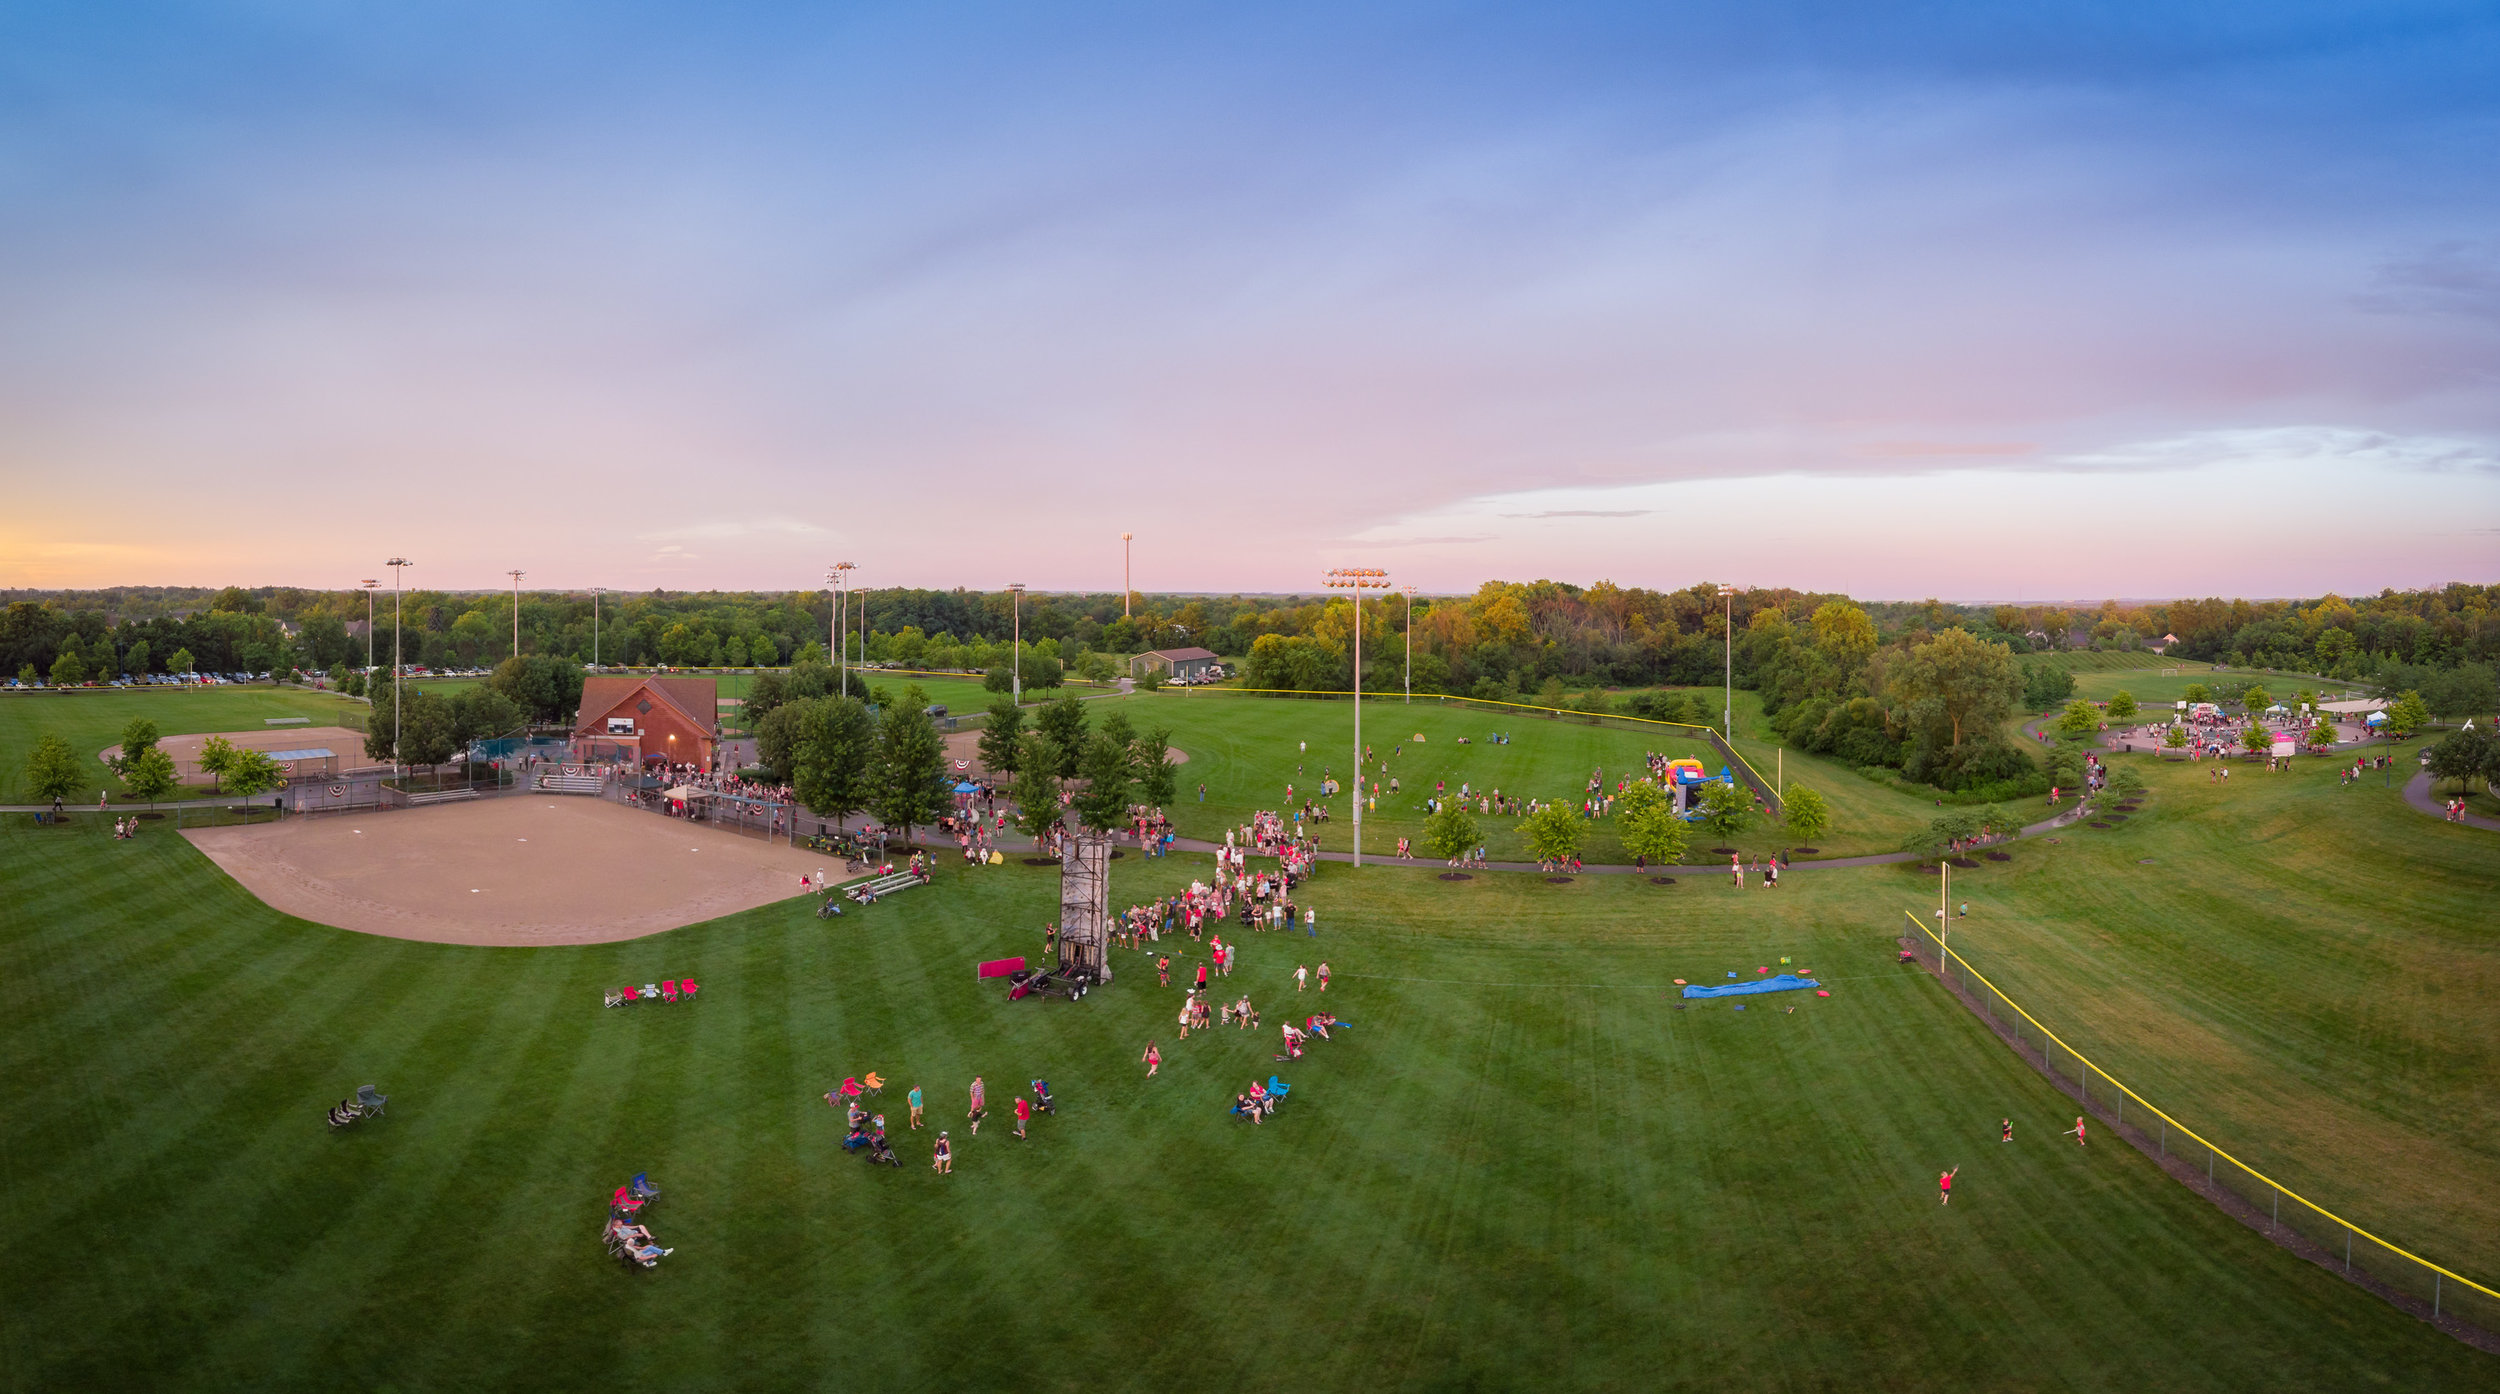 Oxford Ohio Community Park - photo by Ron Hautau.jpg